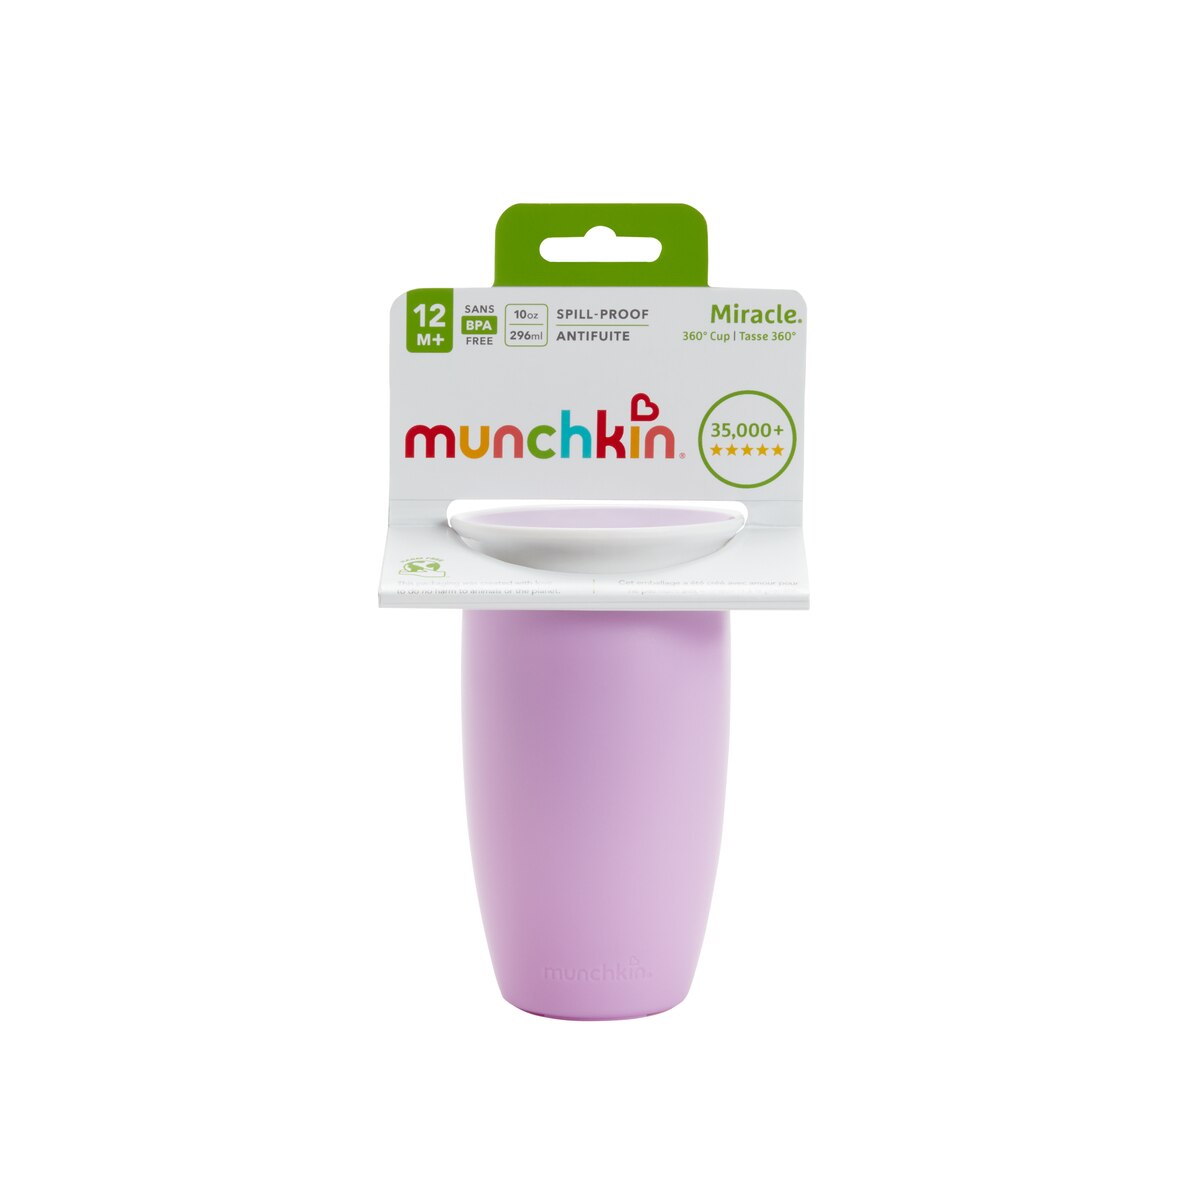 Munchkin Miracle 360, 10 OZ Cup, 1 EA